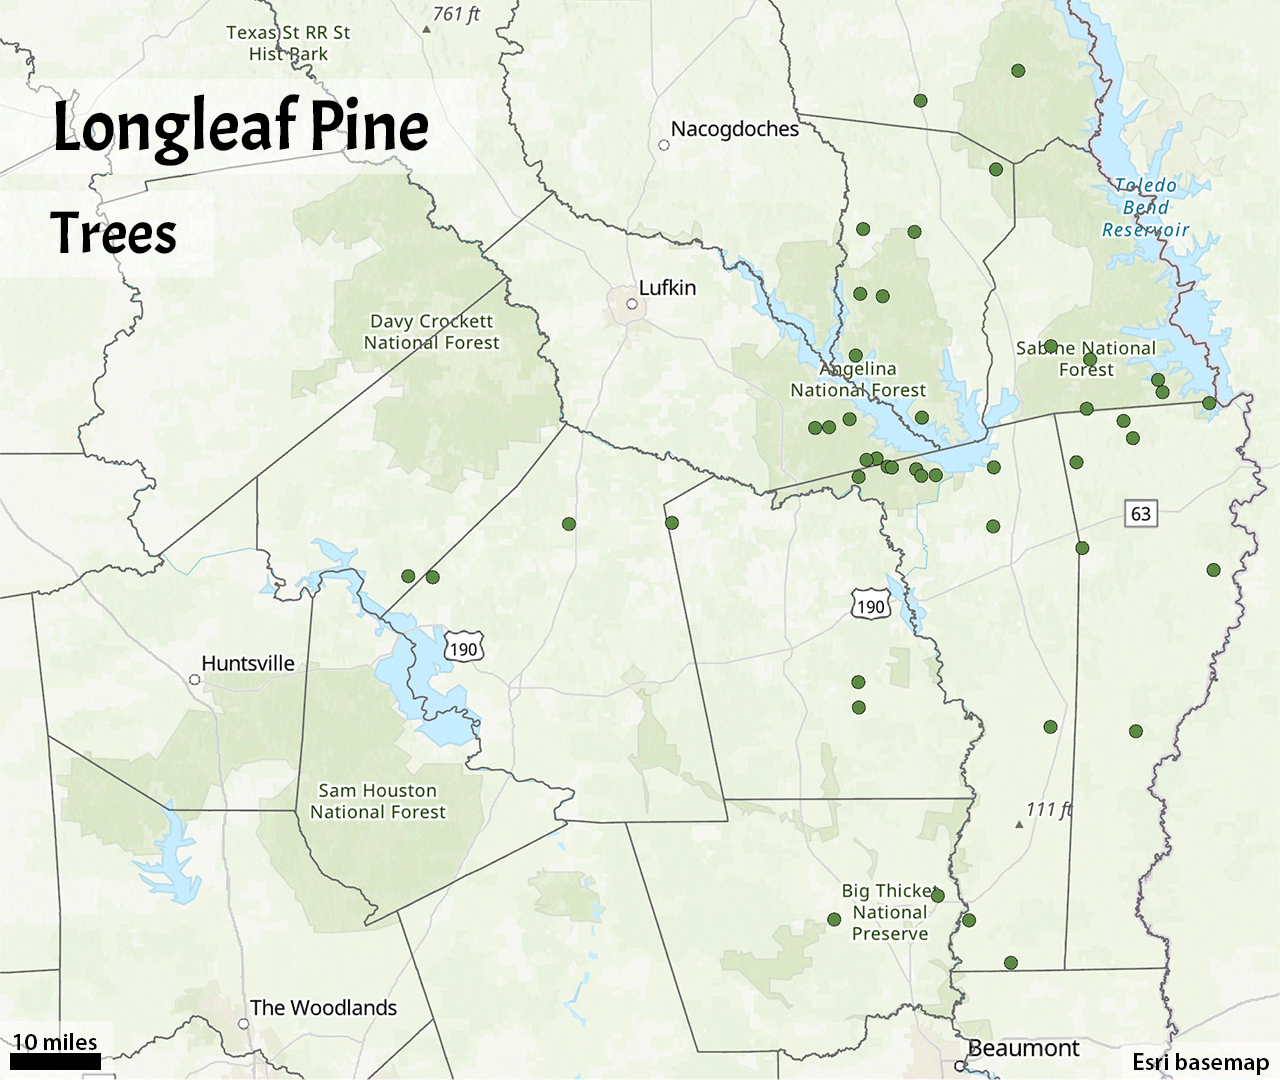 Longleaf pine trees and seedlings